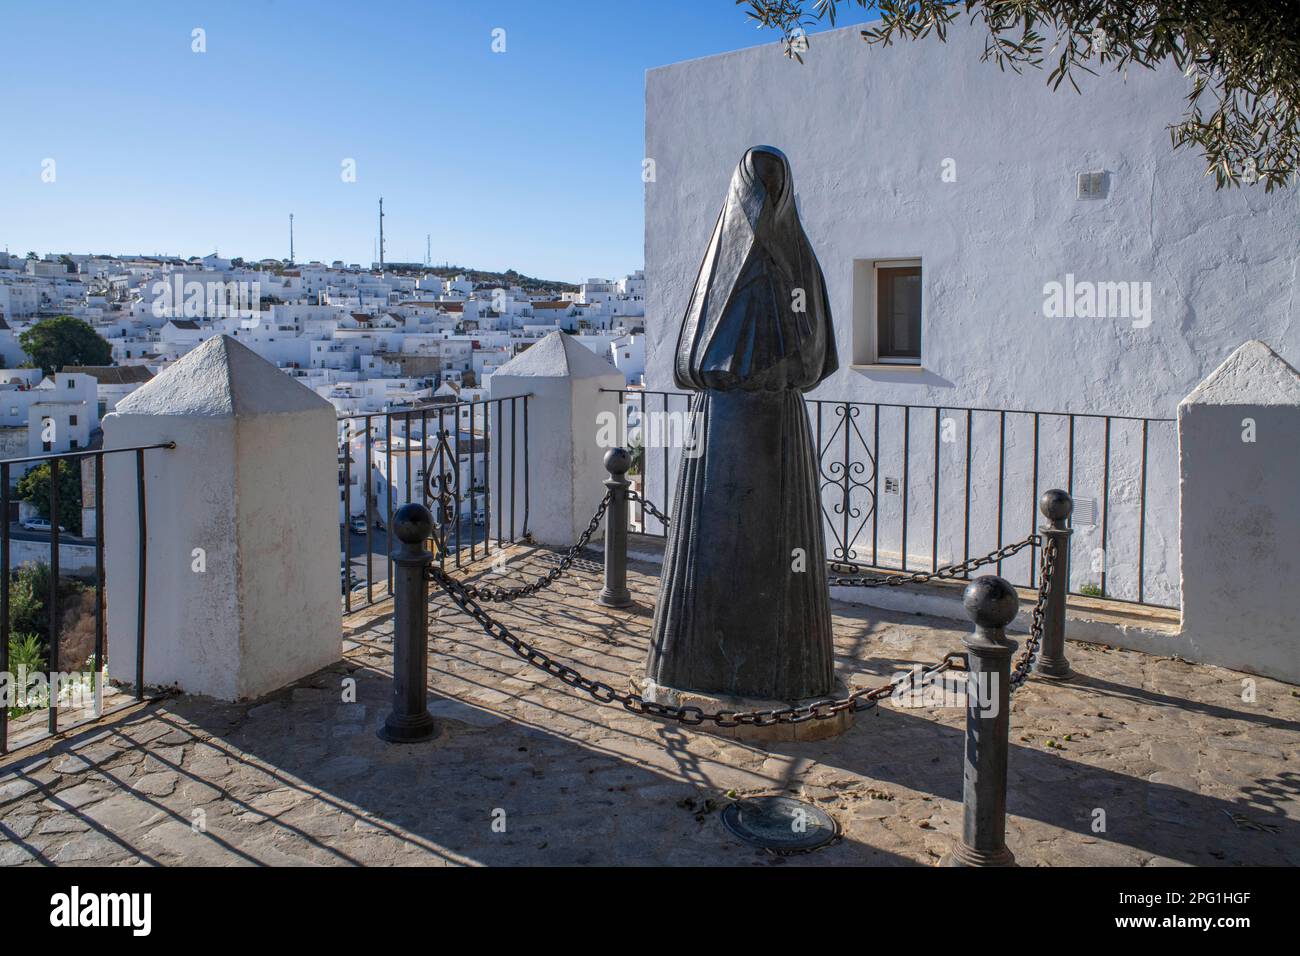 Statue of Woman with traditional black dress Las Cobijadas in Vejer de la Frontera, Cadiz province, Costa de la luz, Andalusia, Spain.  Numerous vesti Stock Photo